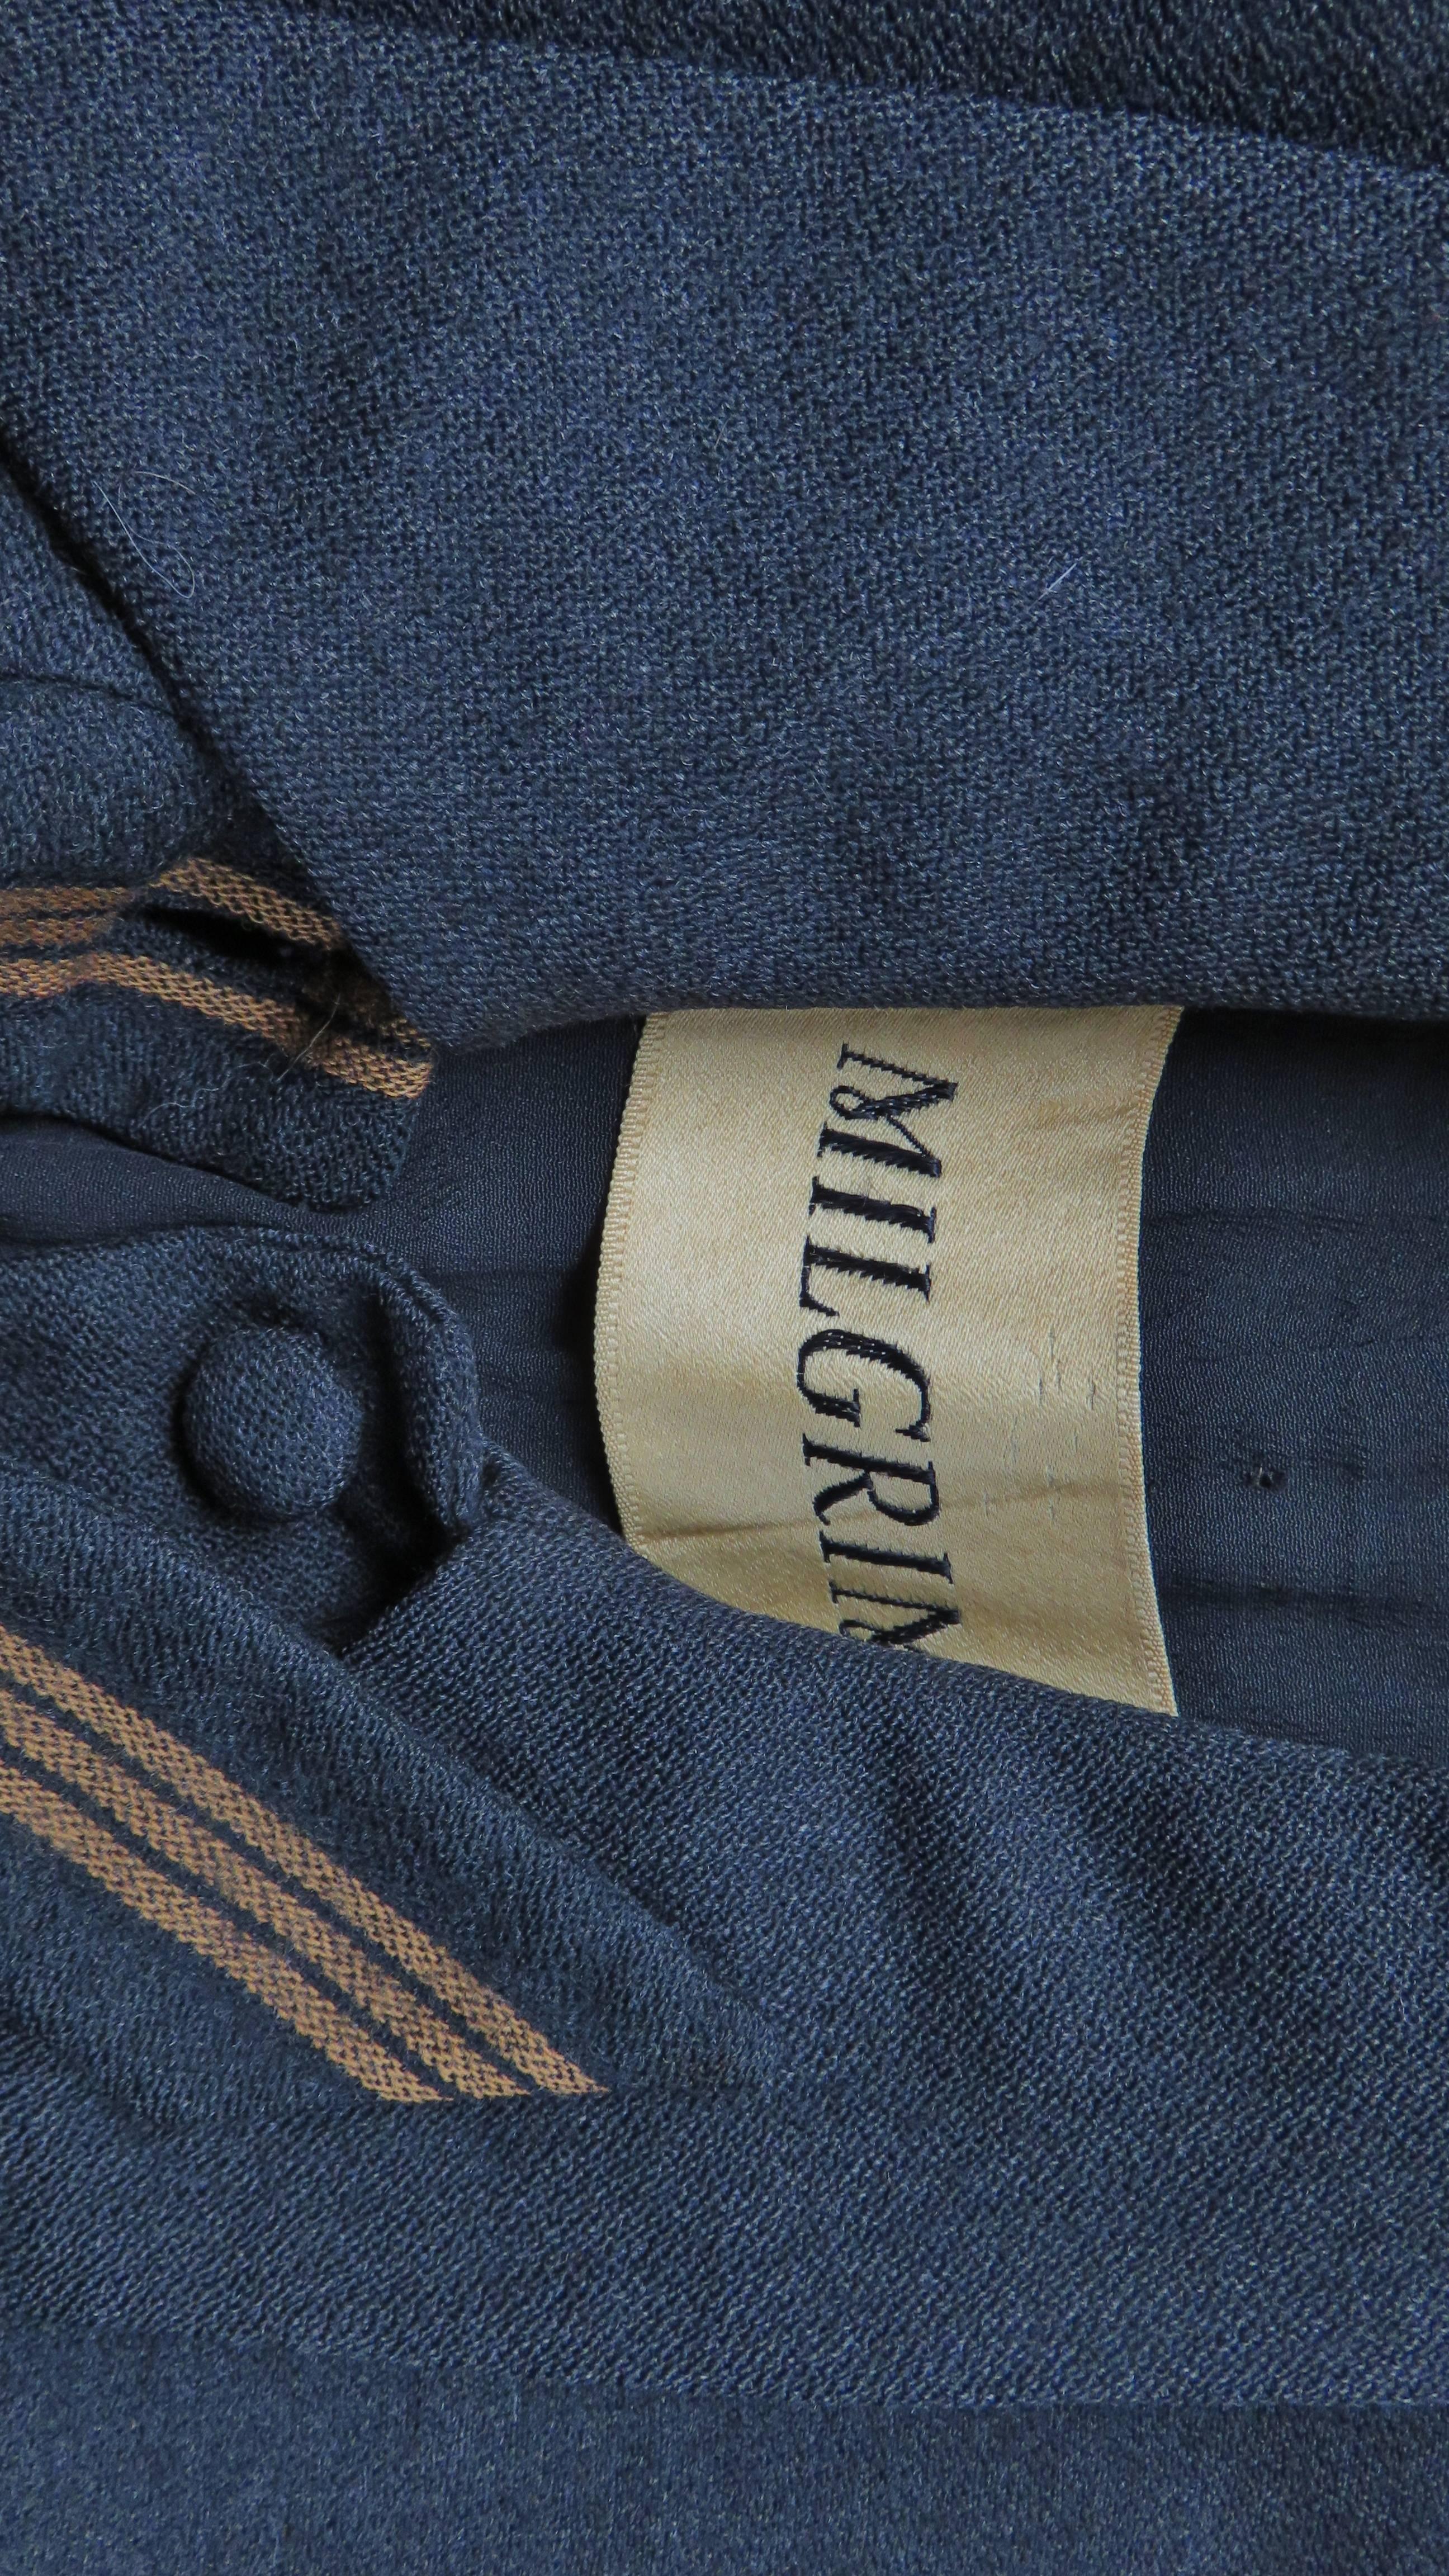 Sally Milgrim 1940s Jacket  2